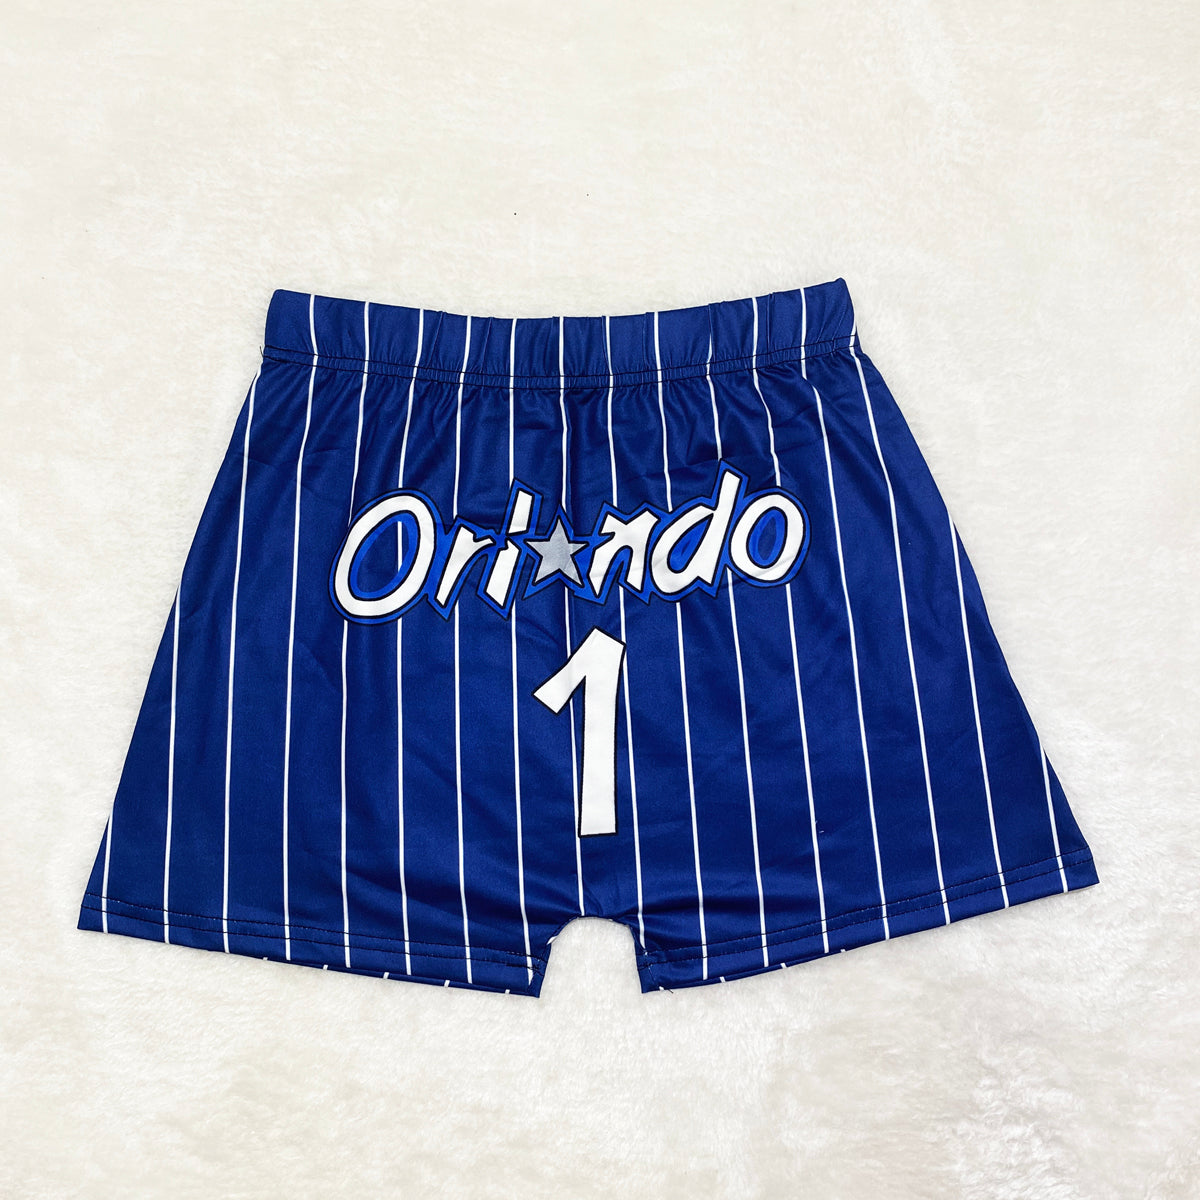 “Orlando” Shorts